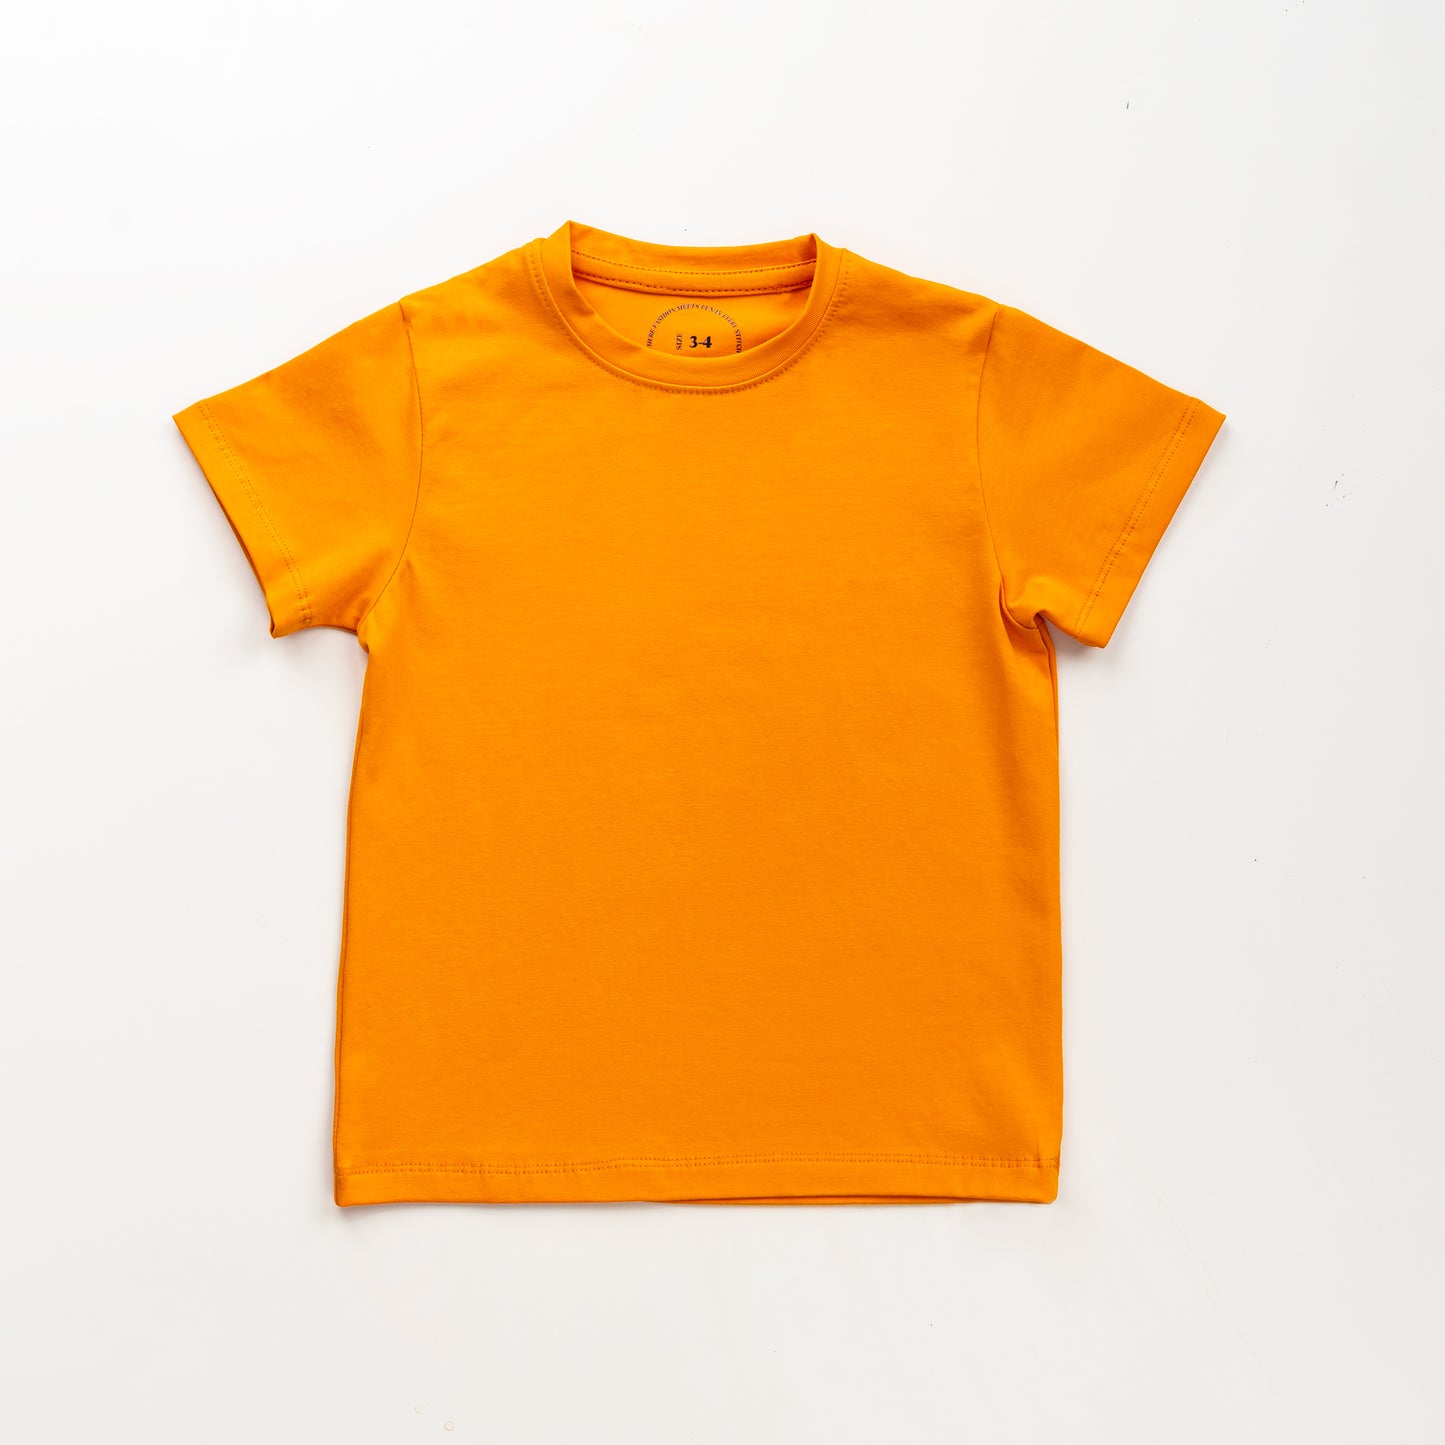 Easy Beezy "Dog Balloon" T-Shirt Pack (Orange & Yellow)